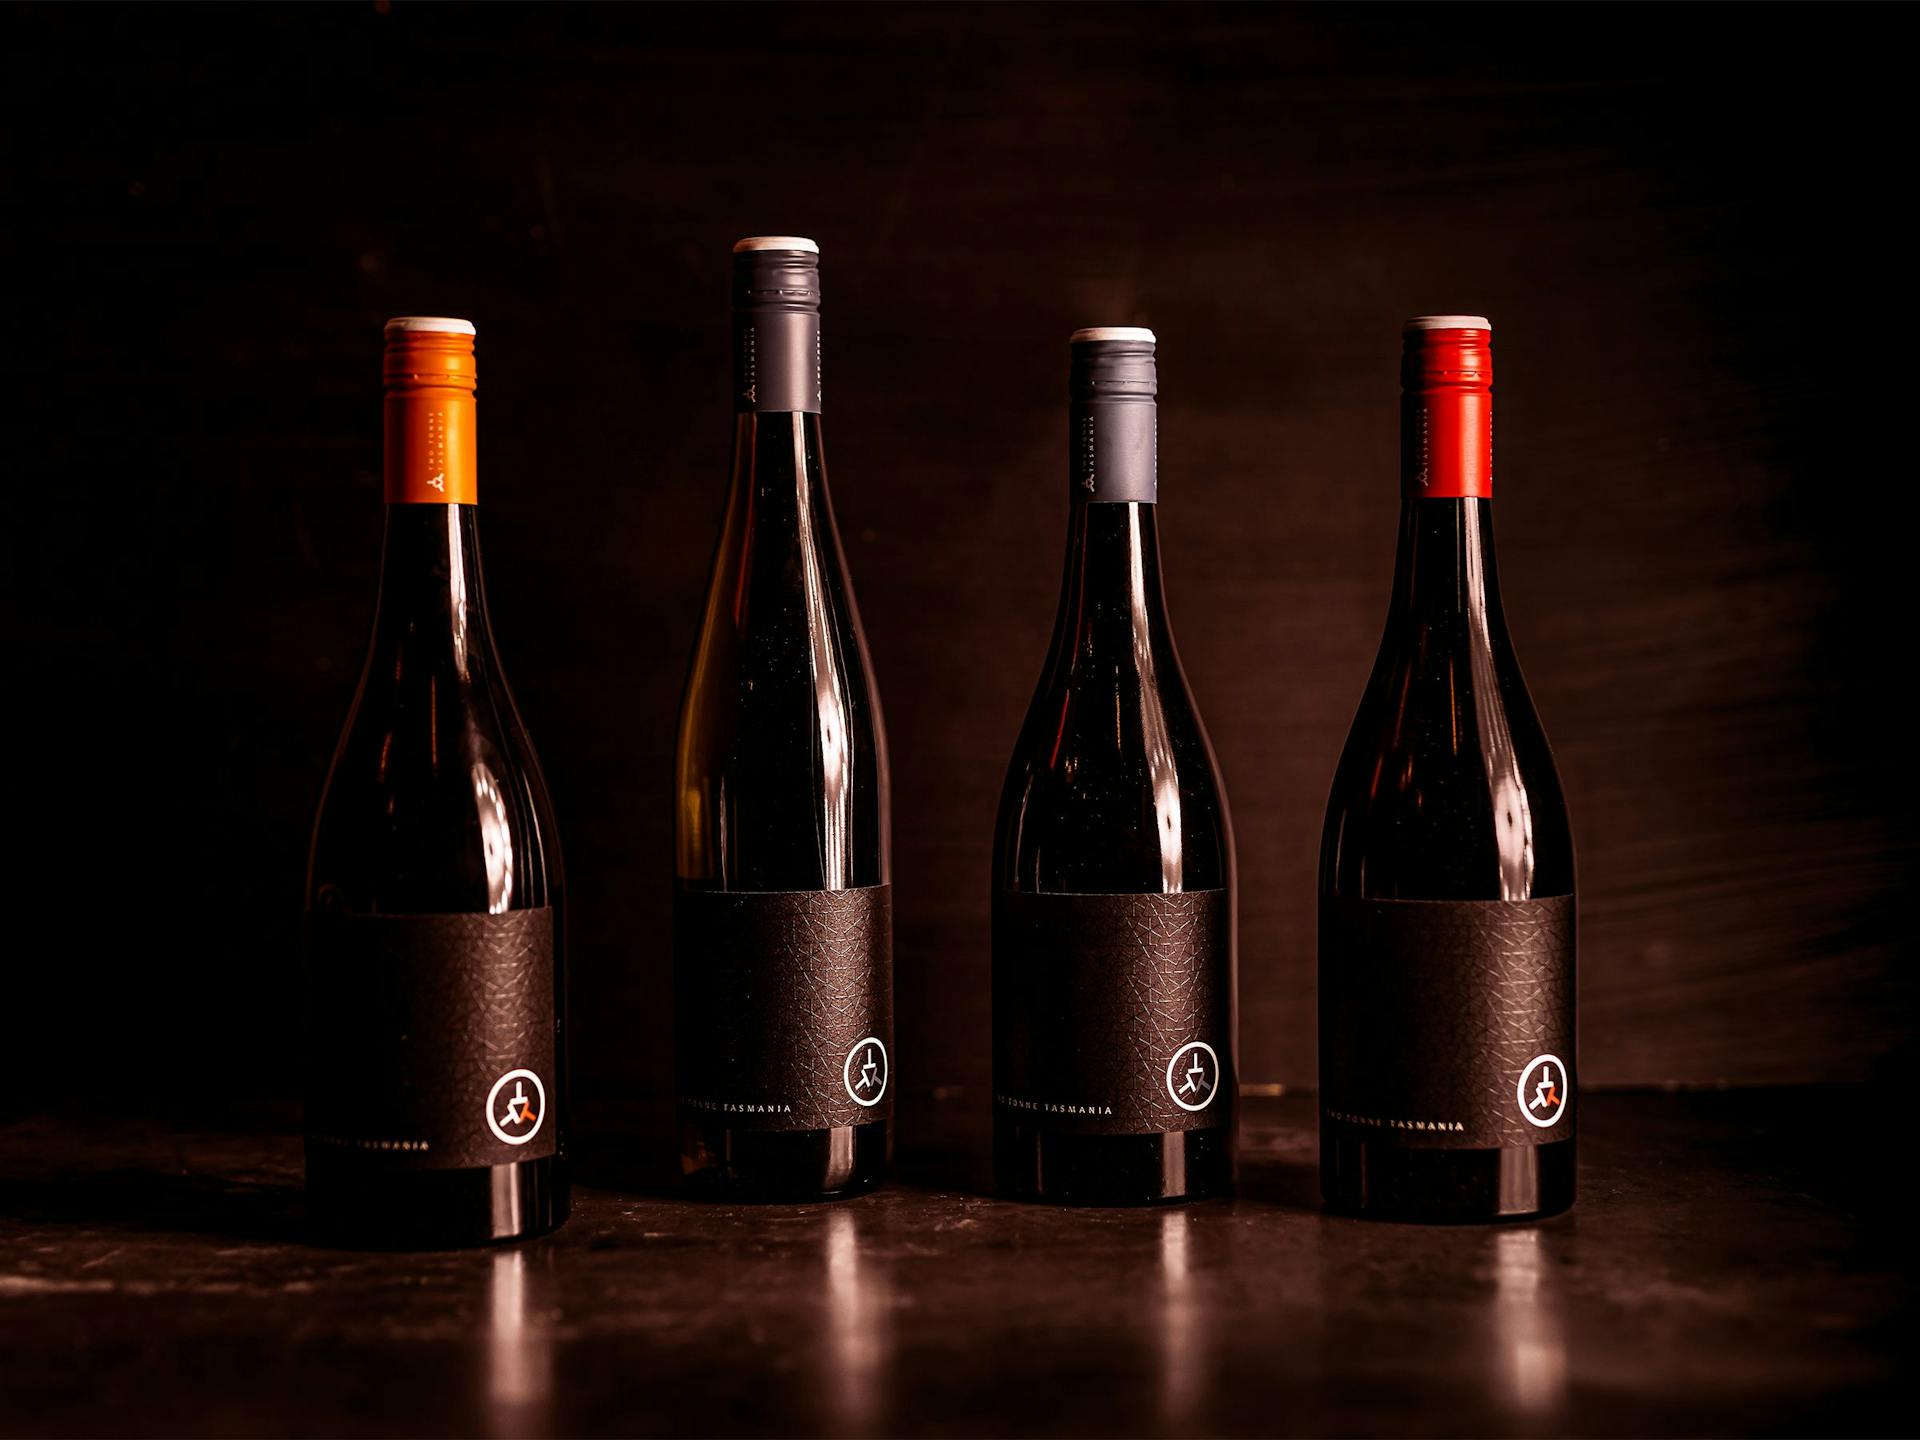 Four bottles of wine against a dark backdrop